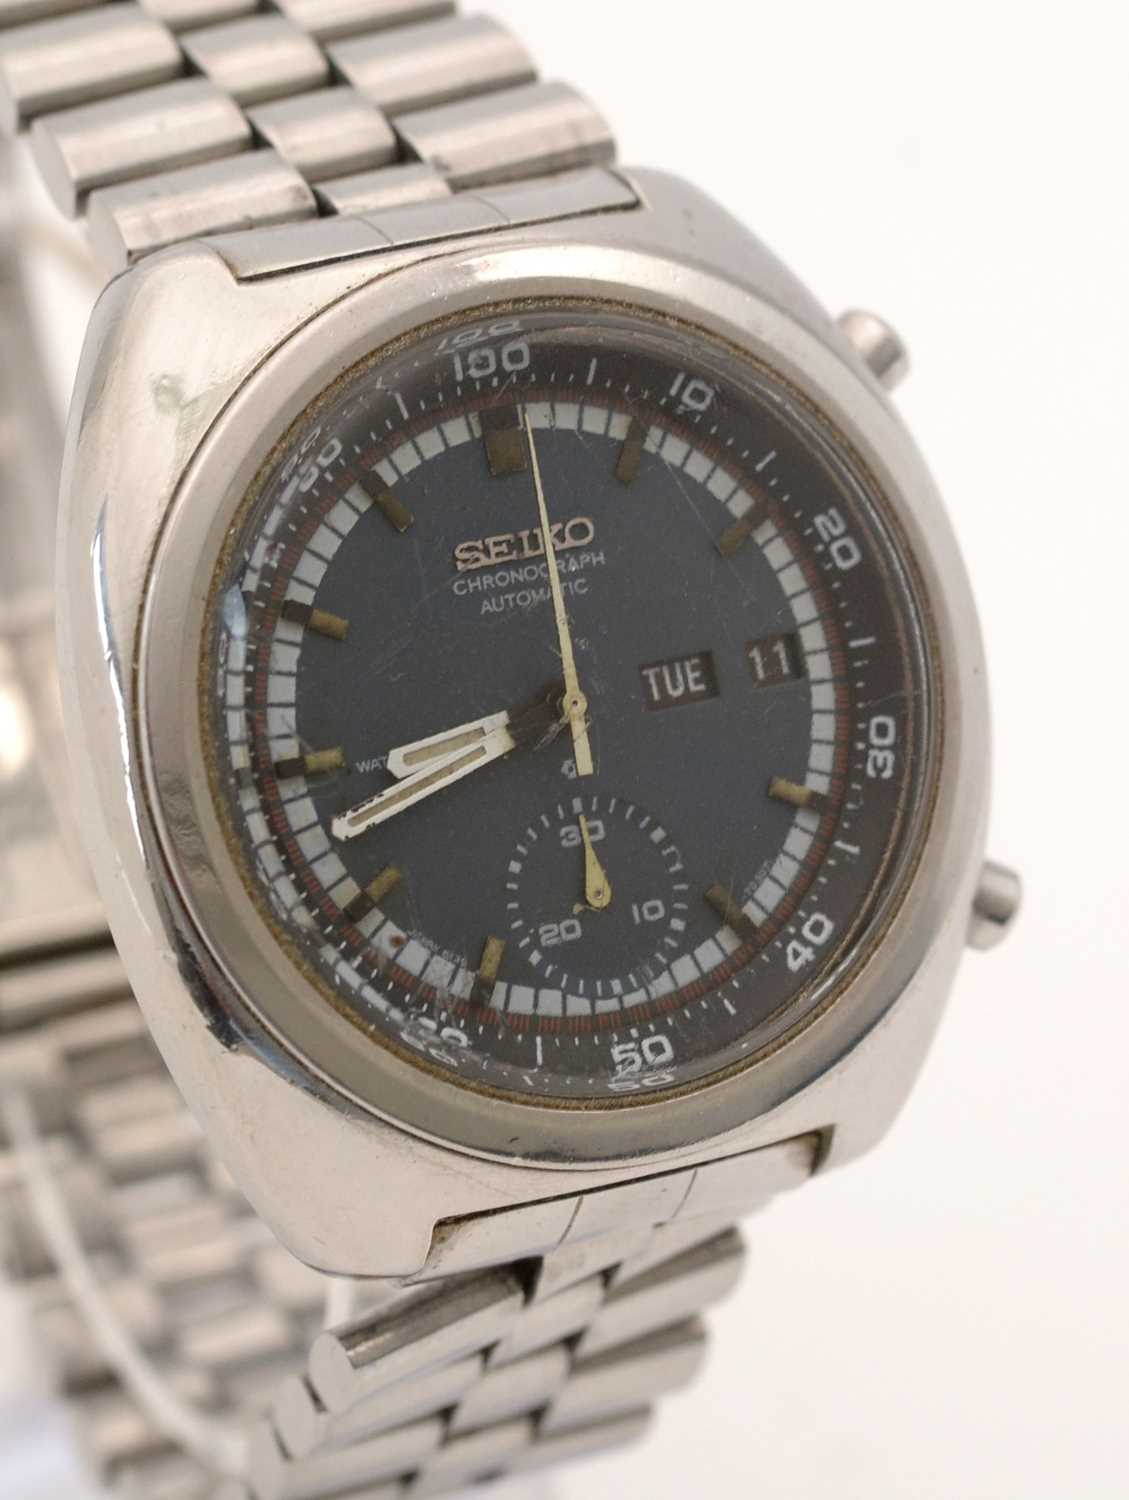 Lot 301 - Seiko chronograph wristwatch.